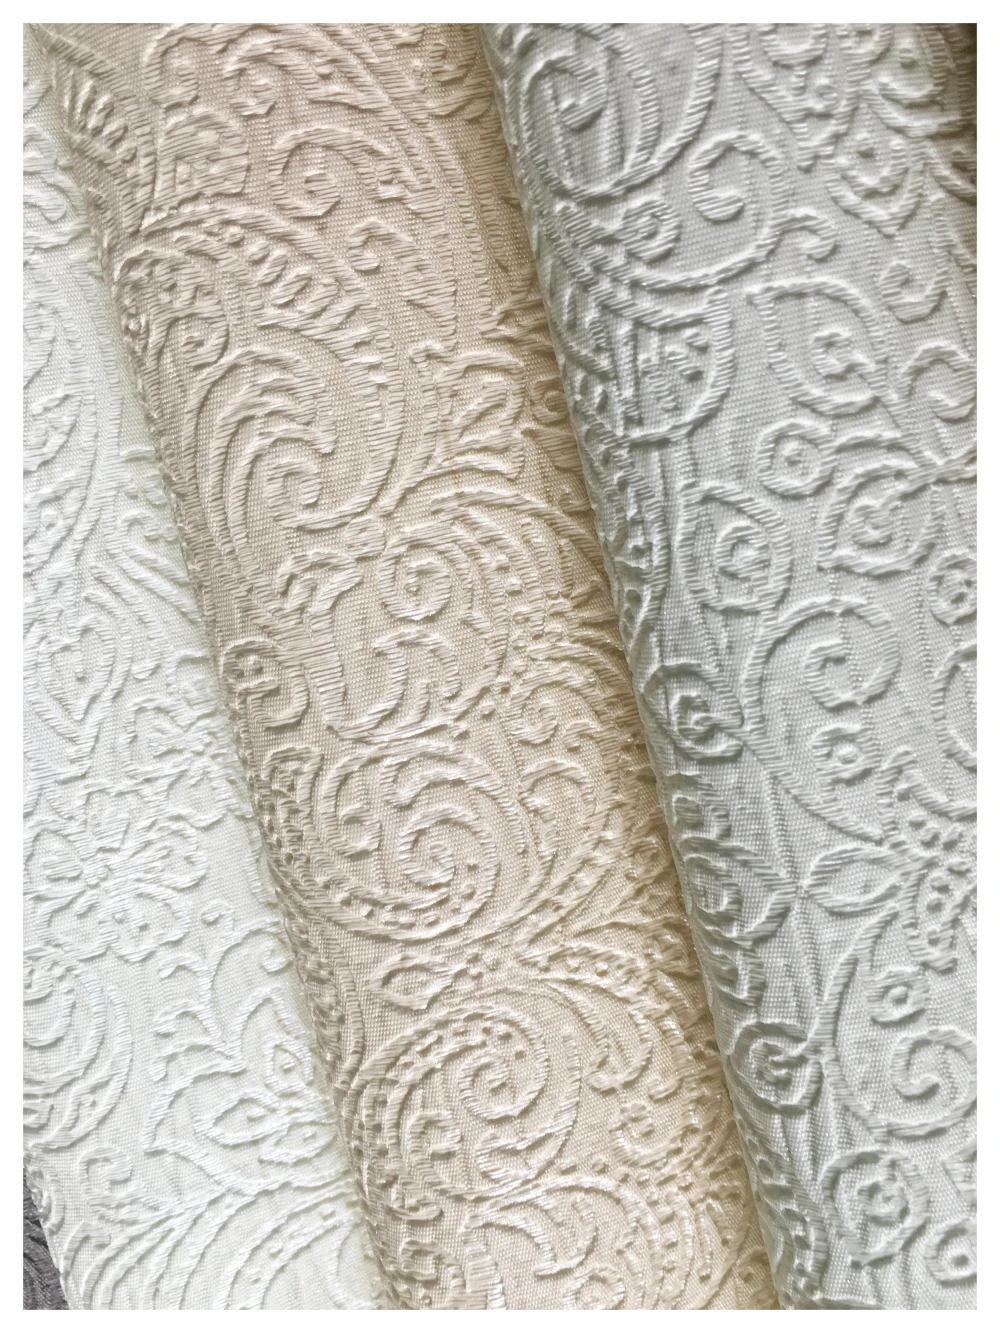  3d  Foam  Wallpaper  Fabric Backed Vinyl Wallpaper  Buy 